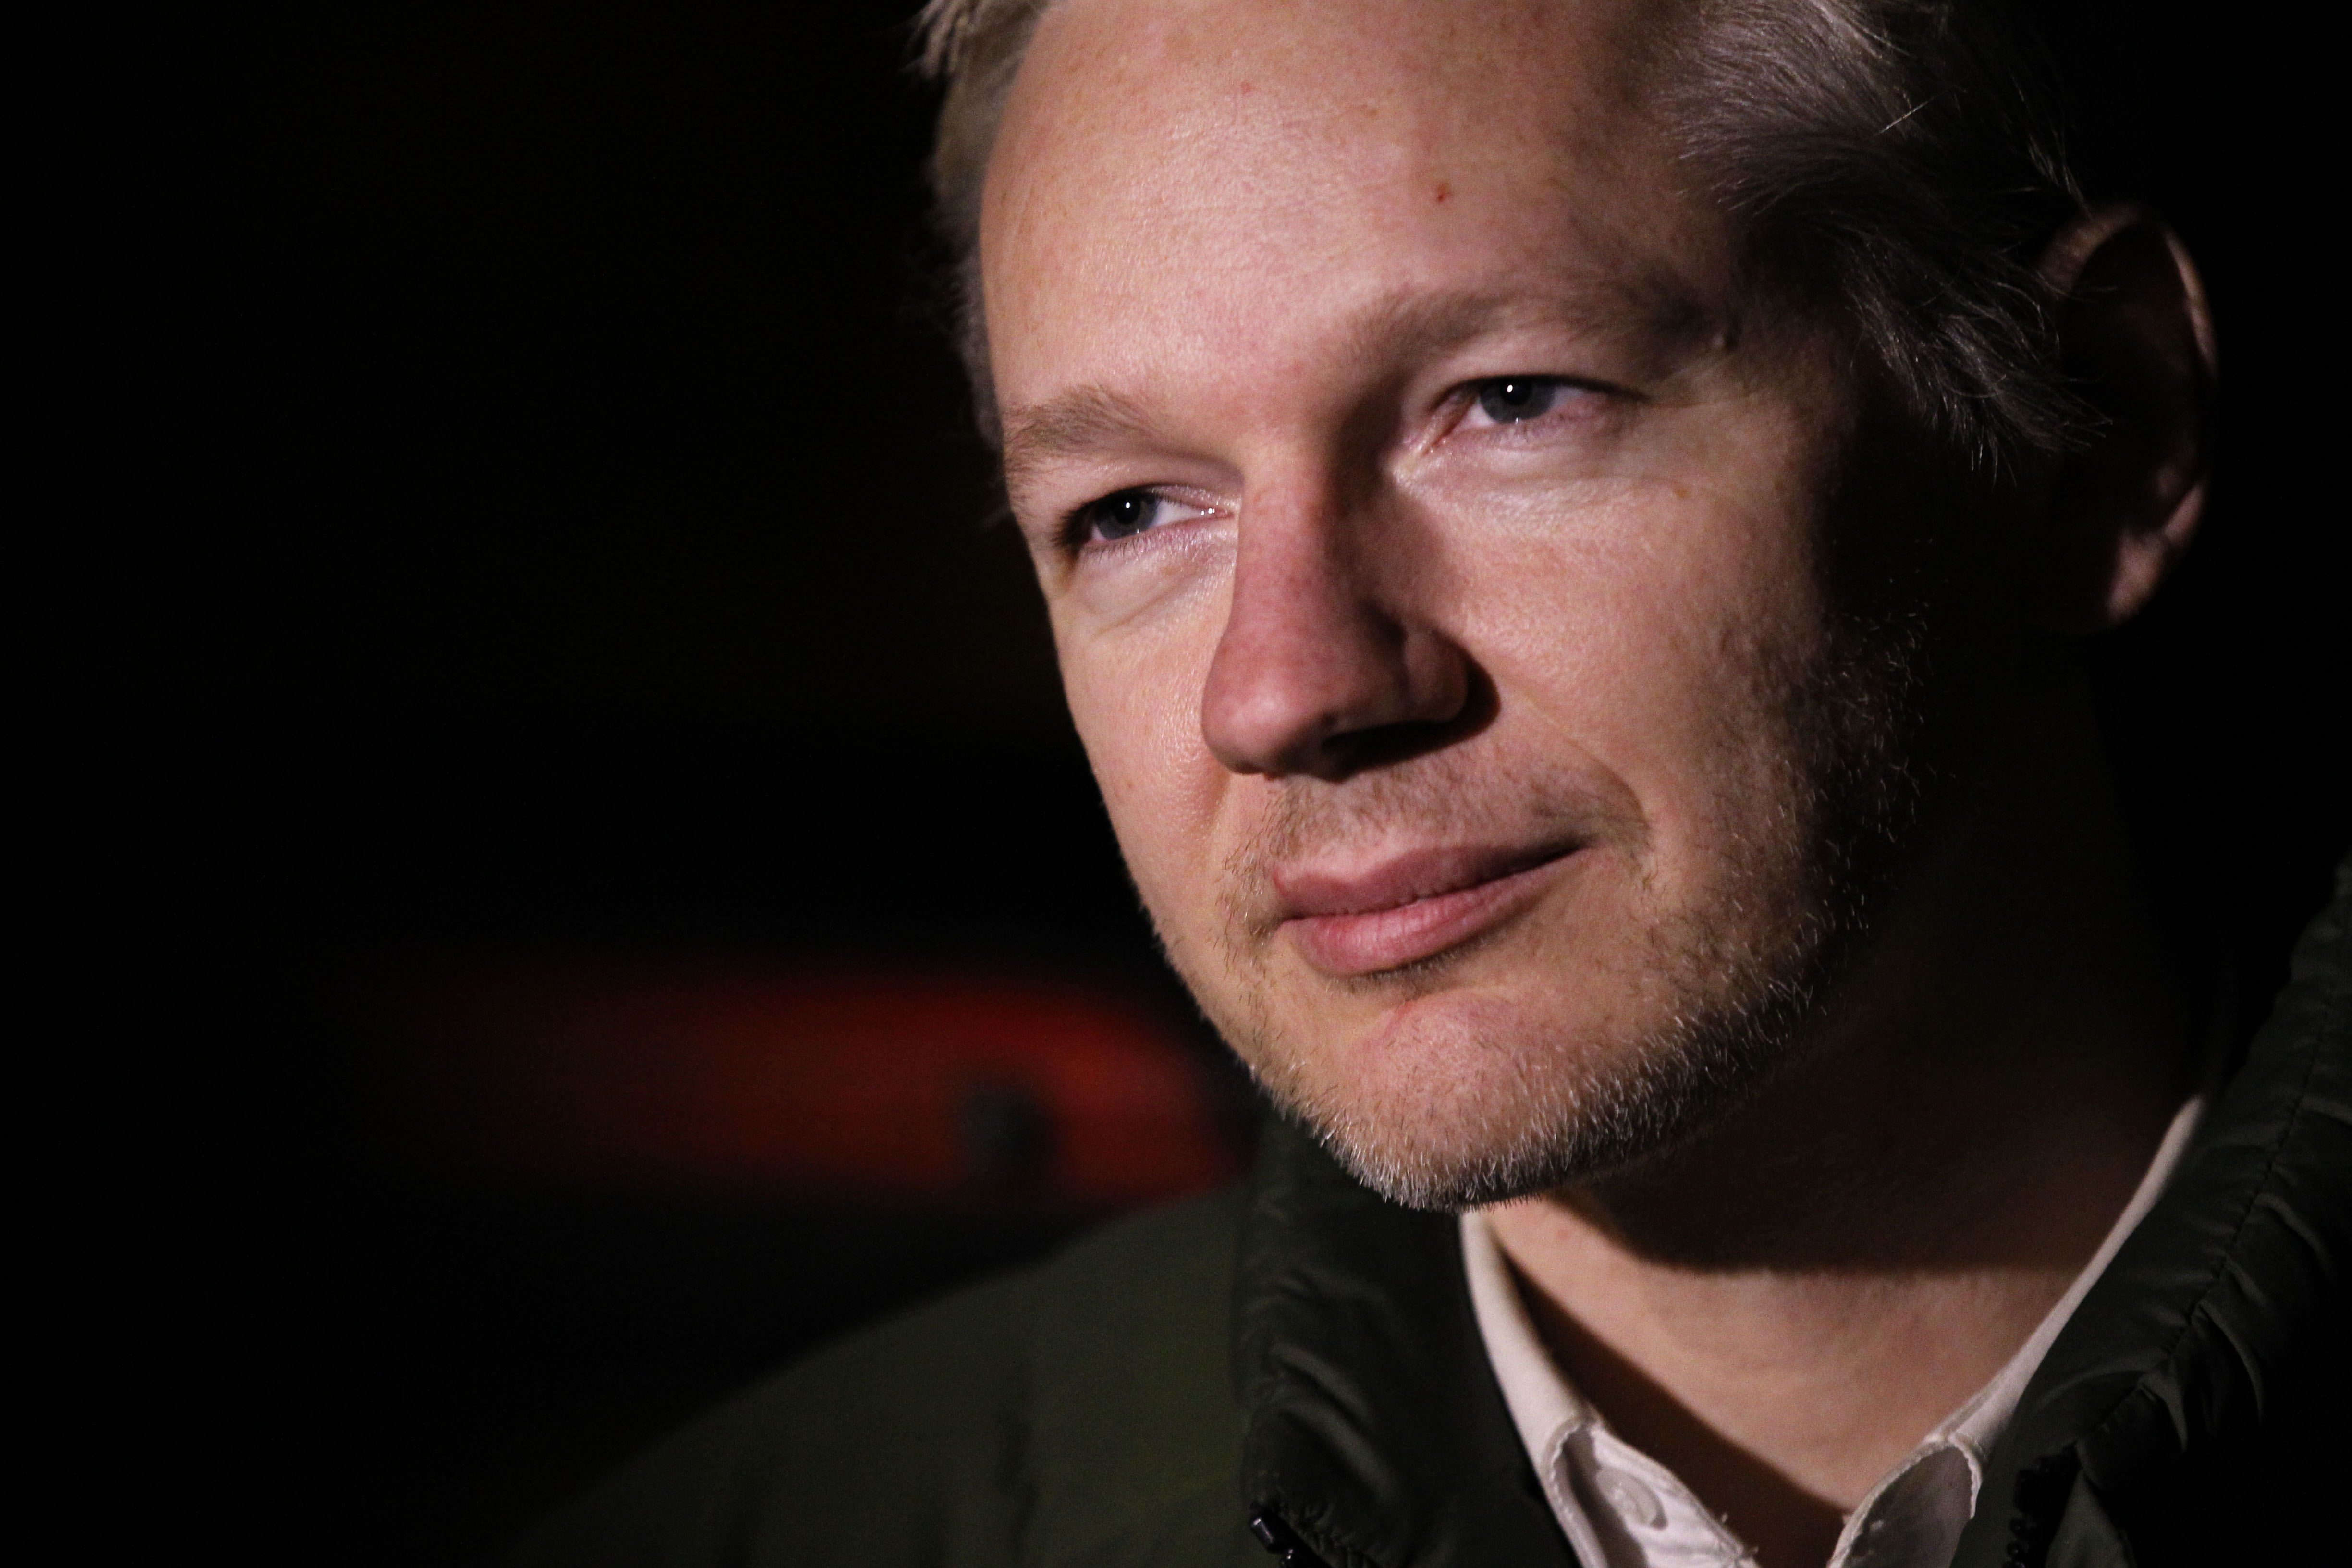 Våldtäkt , Brott och straff, Wikileaks, Julian Assange, USA